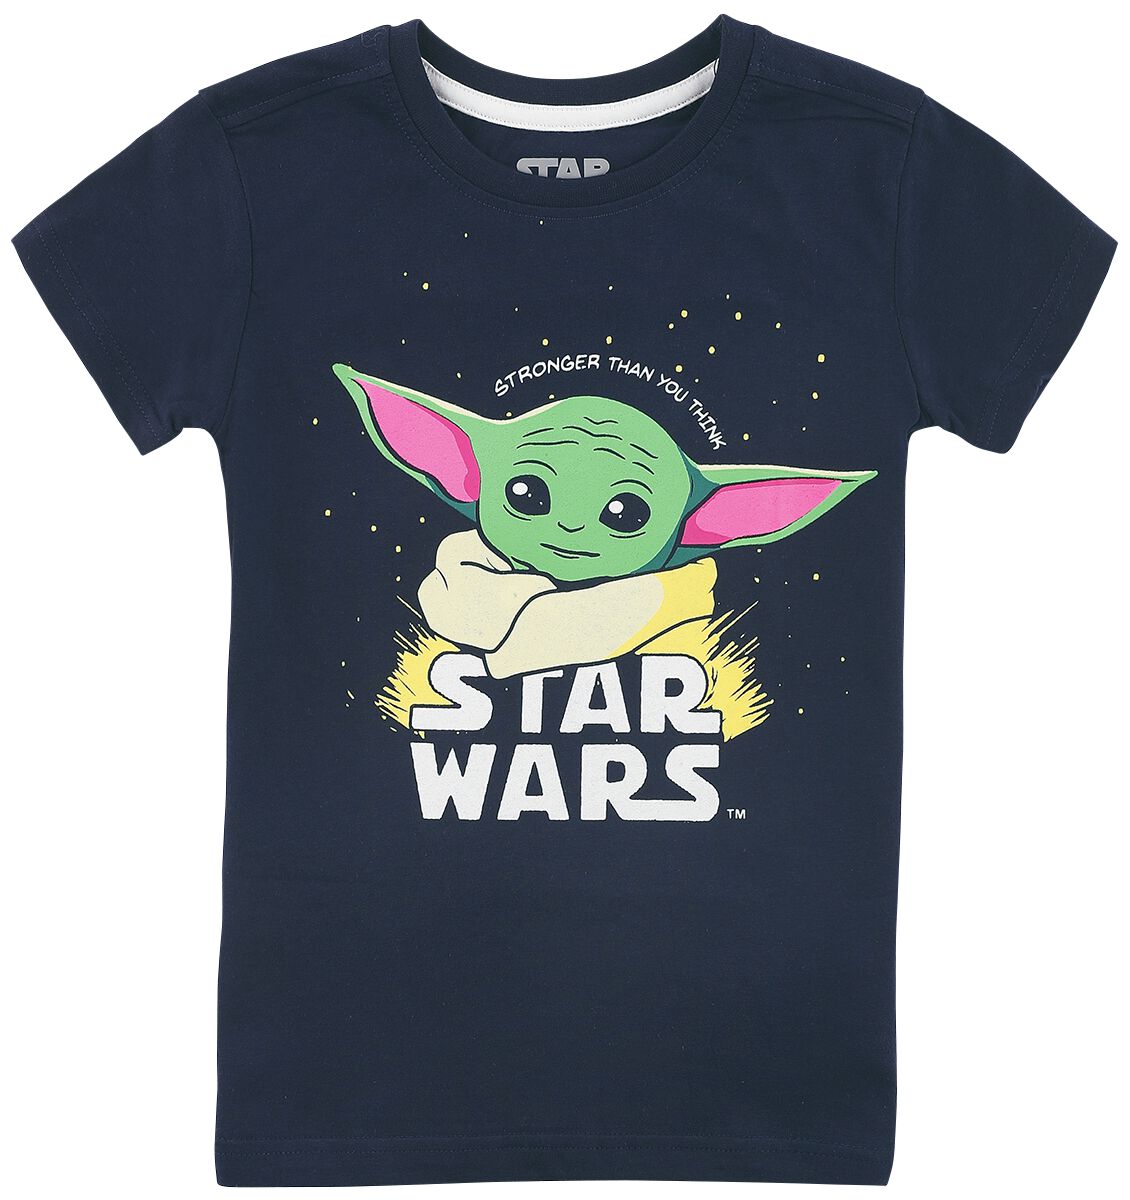 Star Wars Kids - The Mandalorian - Baby Yoda - Grogu T-Shirt dunkelblau in 122/128 von Star Wars